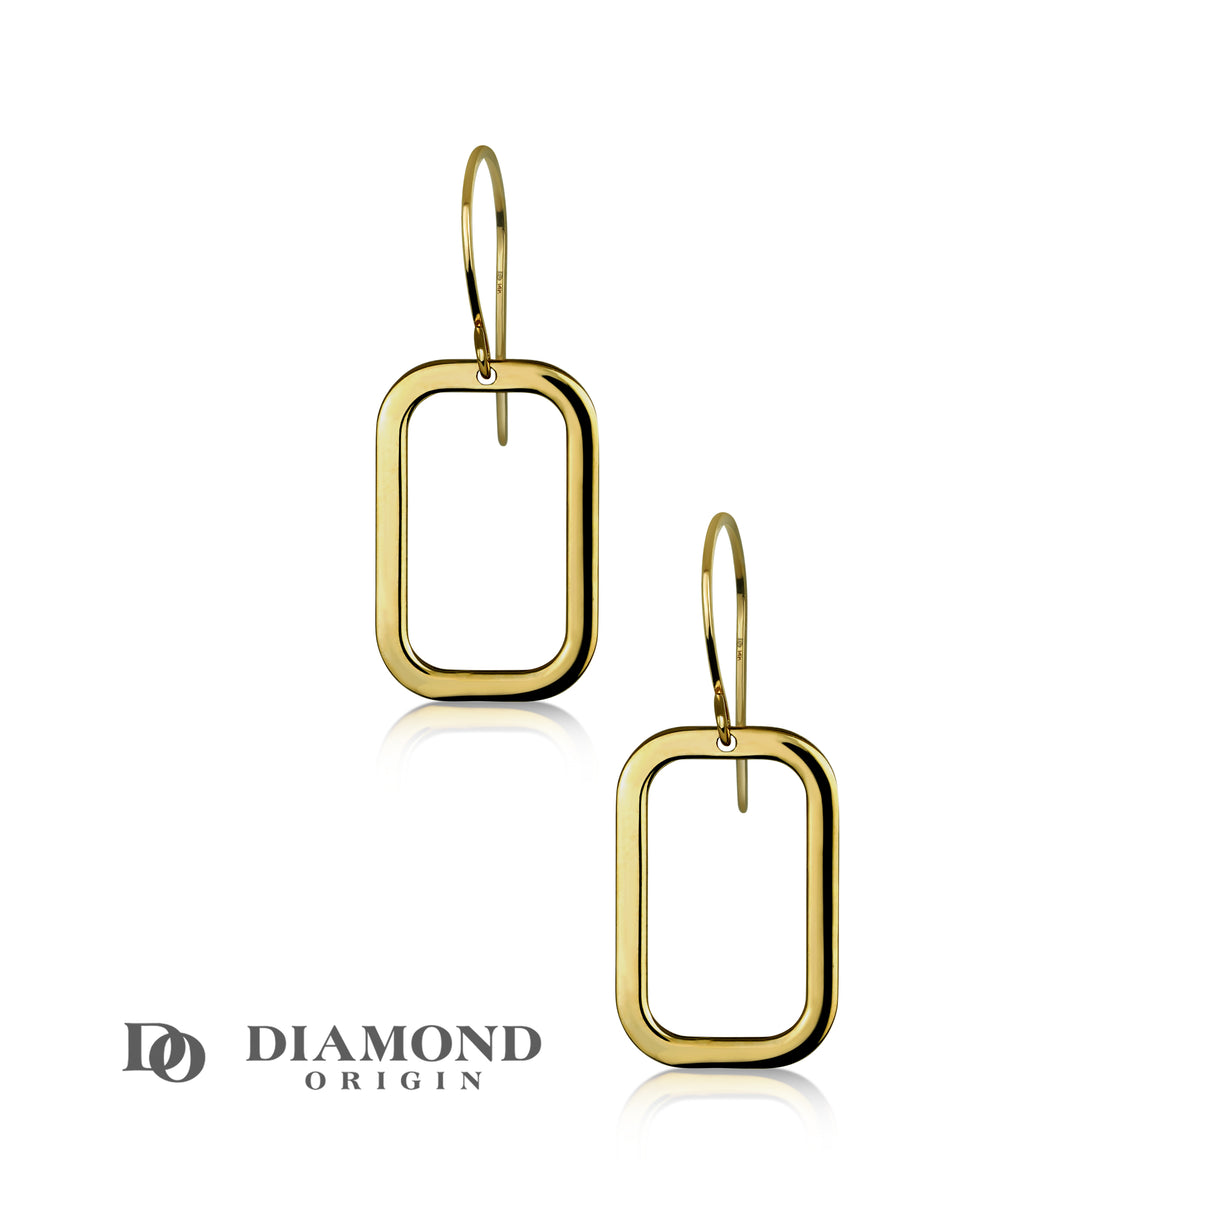 rectangle earrings, solid gold earrings, diamond origin, 14K solid gold earrings, aesthetic earrings, minimalistic earrings, geometric earrings, 